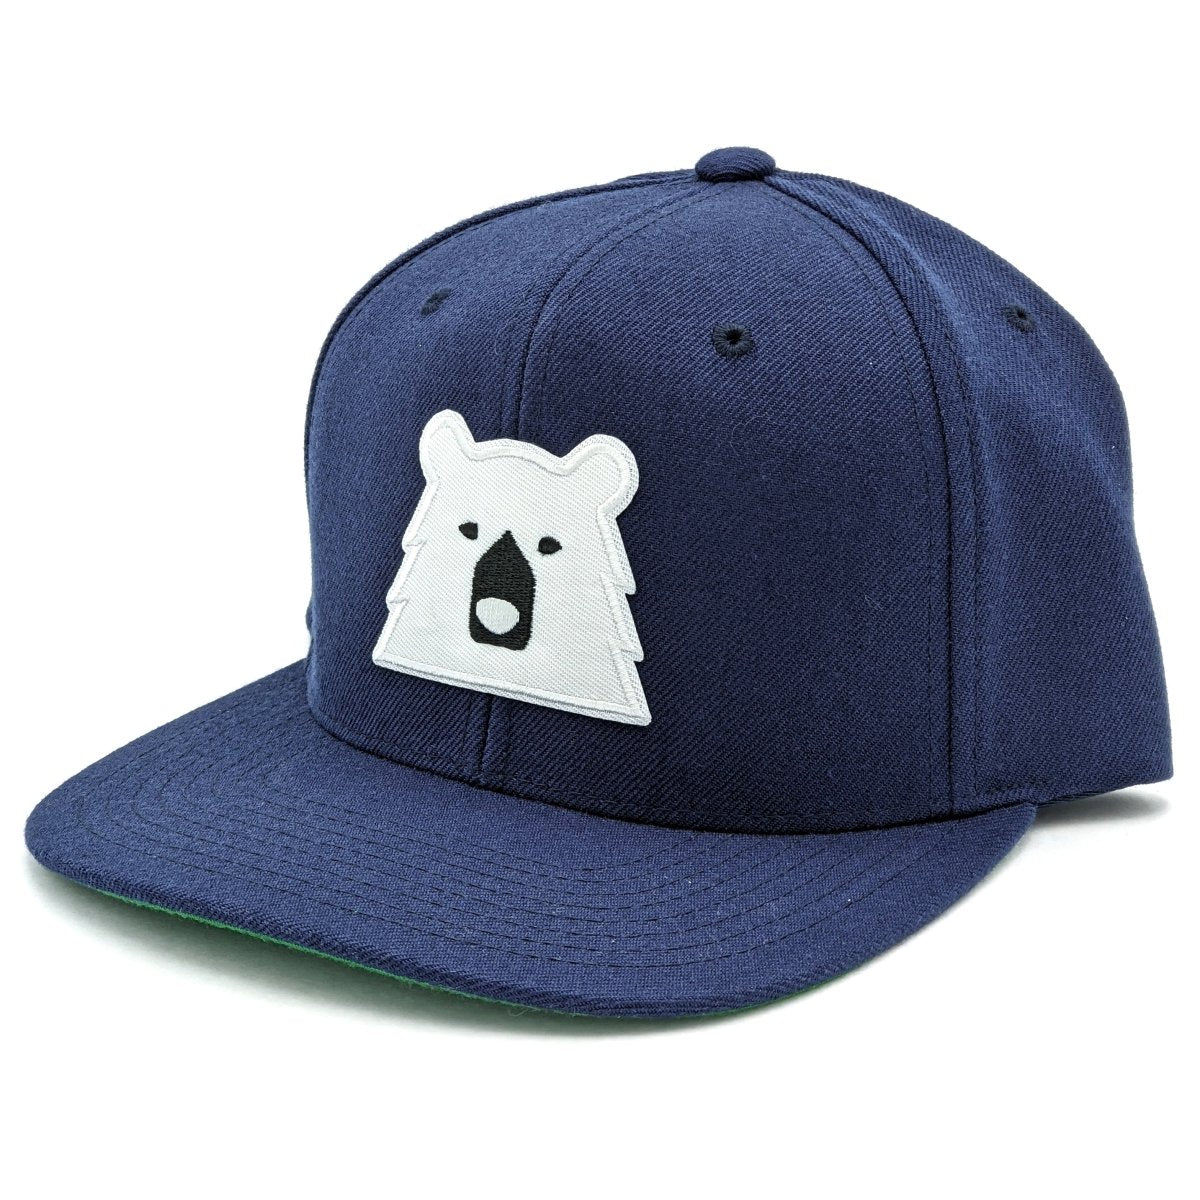 Adult Snapback Hat - Navy w/Polar Bear - North Standard Trading Post